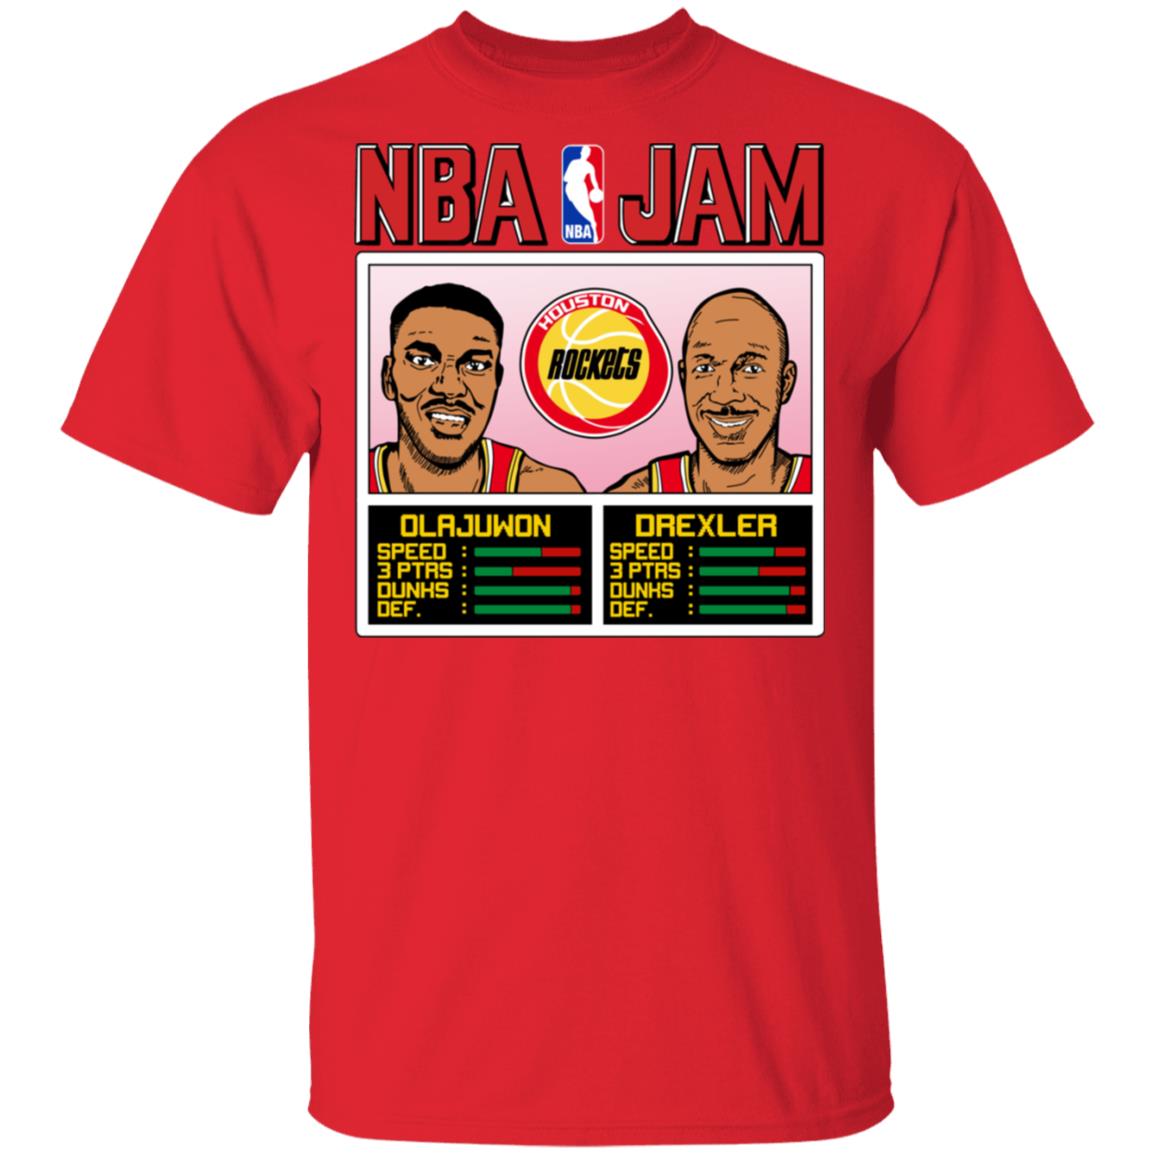 Homage Men's DeAndre Ayton & Devin Booker Charcoal Phoenix Suns NBA Jam T-Shirt Size: Medium